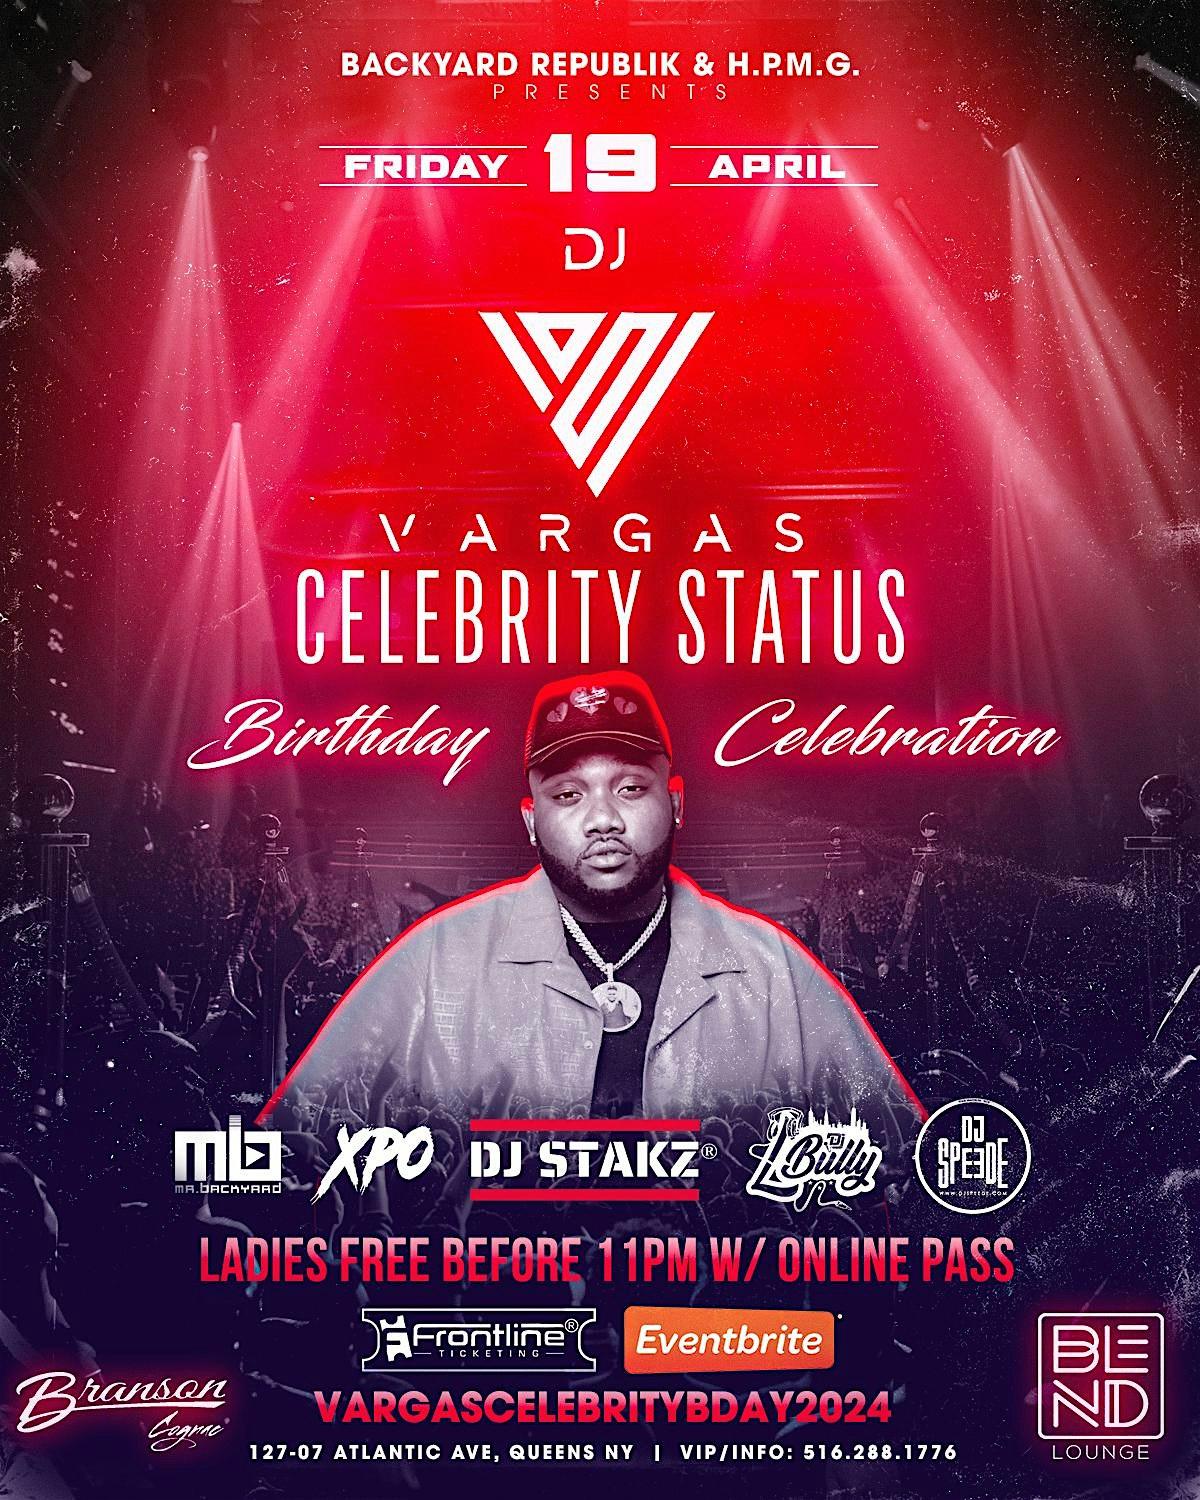 DJ Vargas Birthday Celebration flyer or graphic.